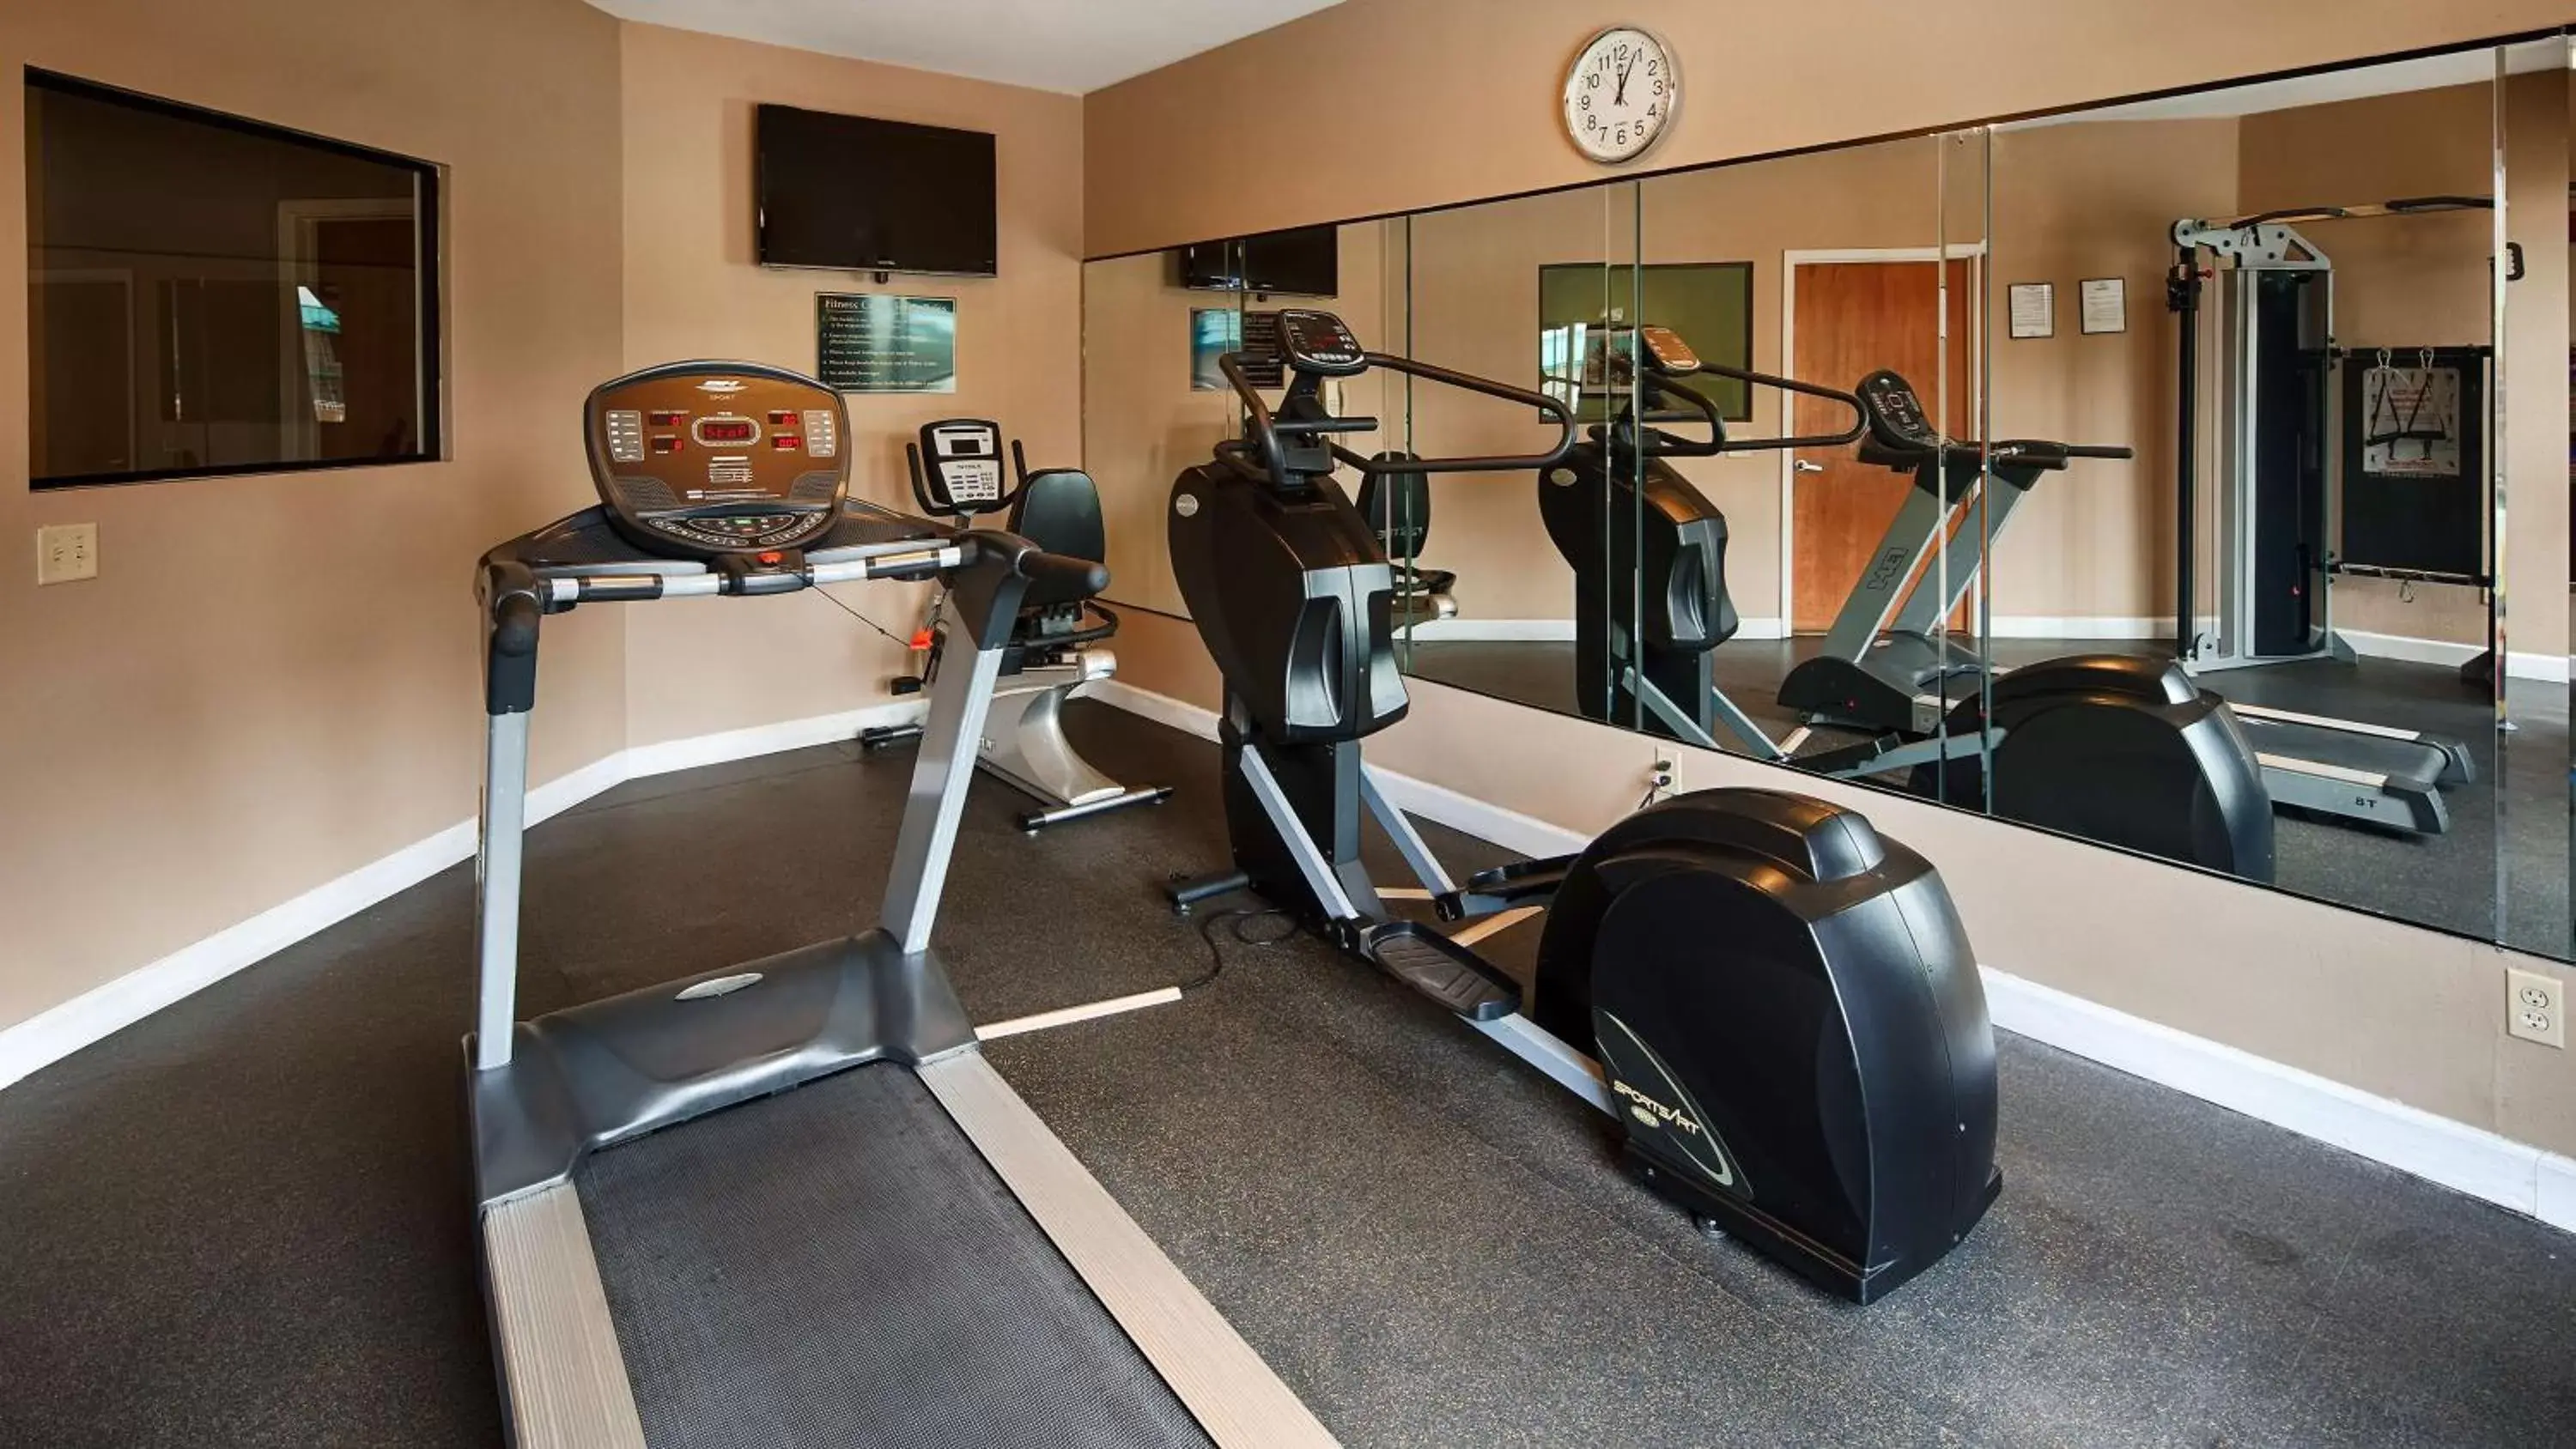 Fitness centre/facilities, Fitness Center/Facilities in Best Western Port Lavaca Inn